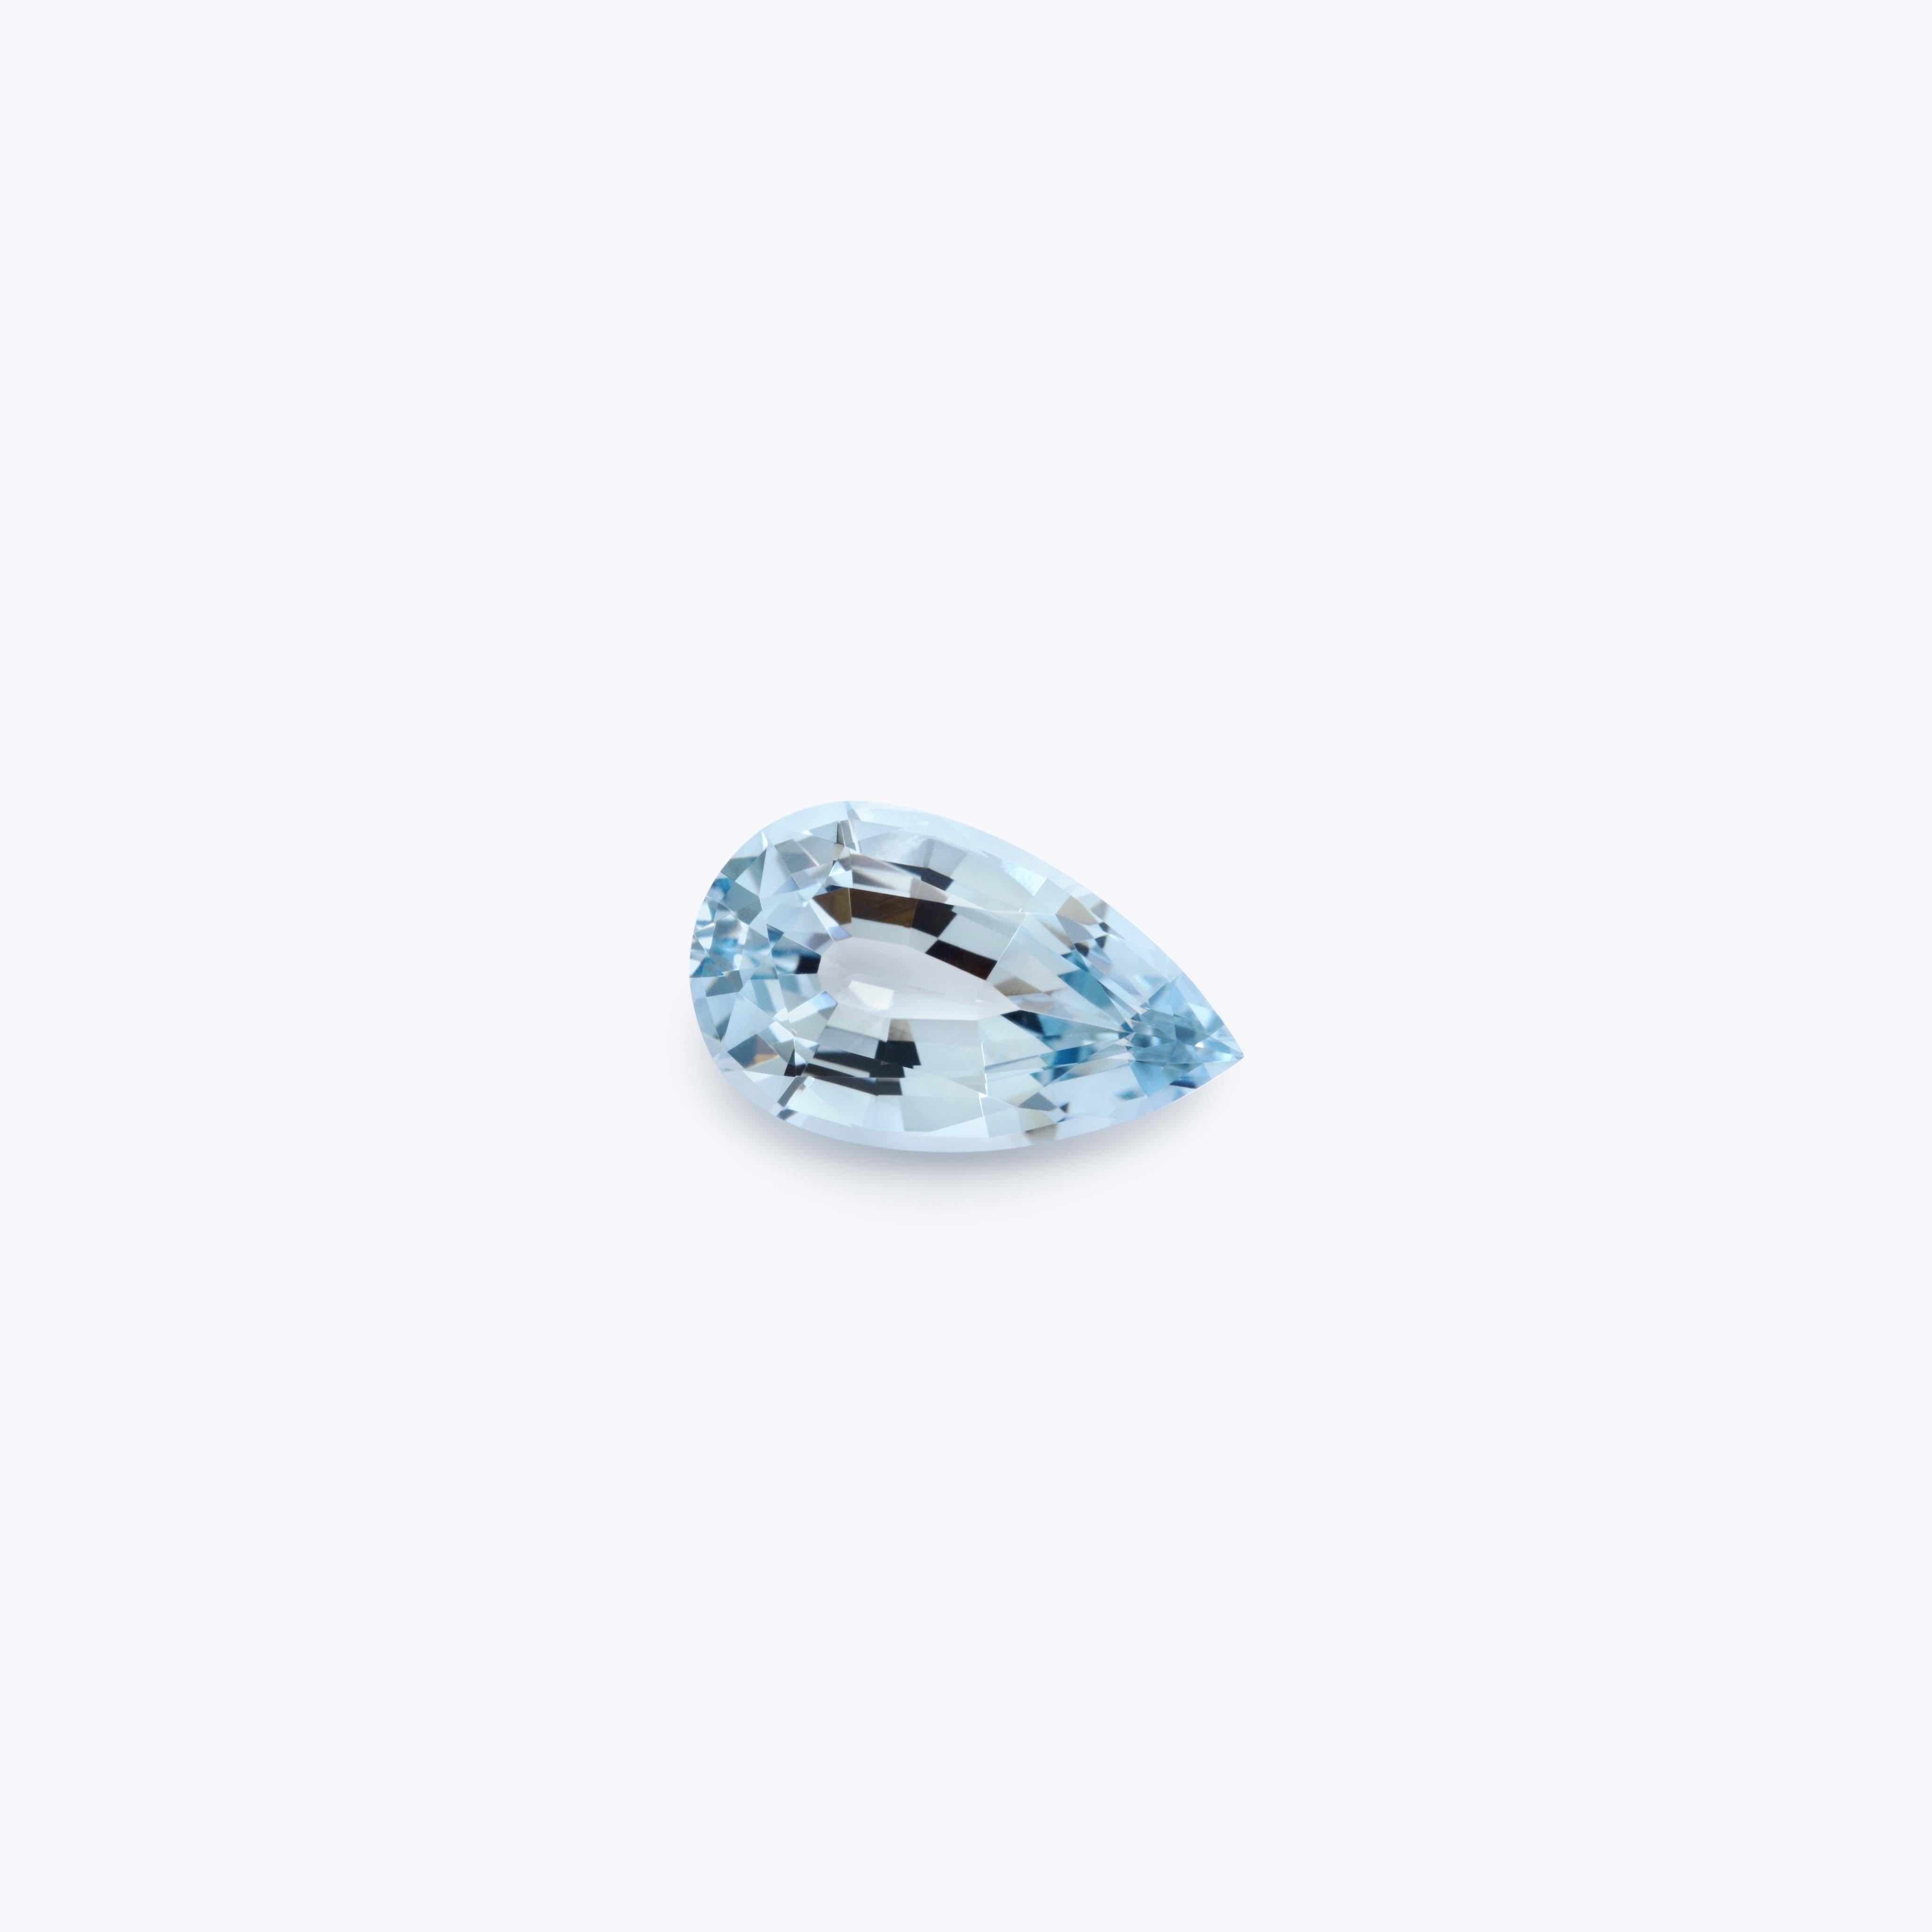 Contemporary Aquamarine Gemstone Ring 4.60 Carat Loose Unmounted Pear Shape Gem For Sale